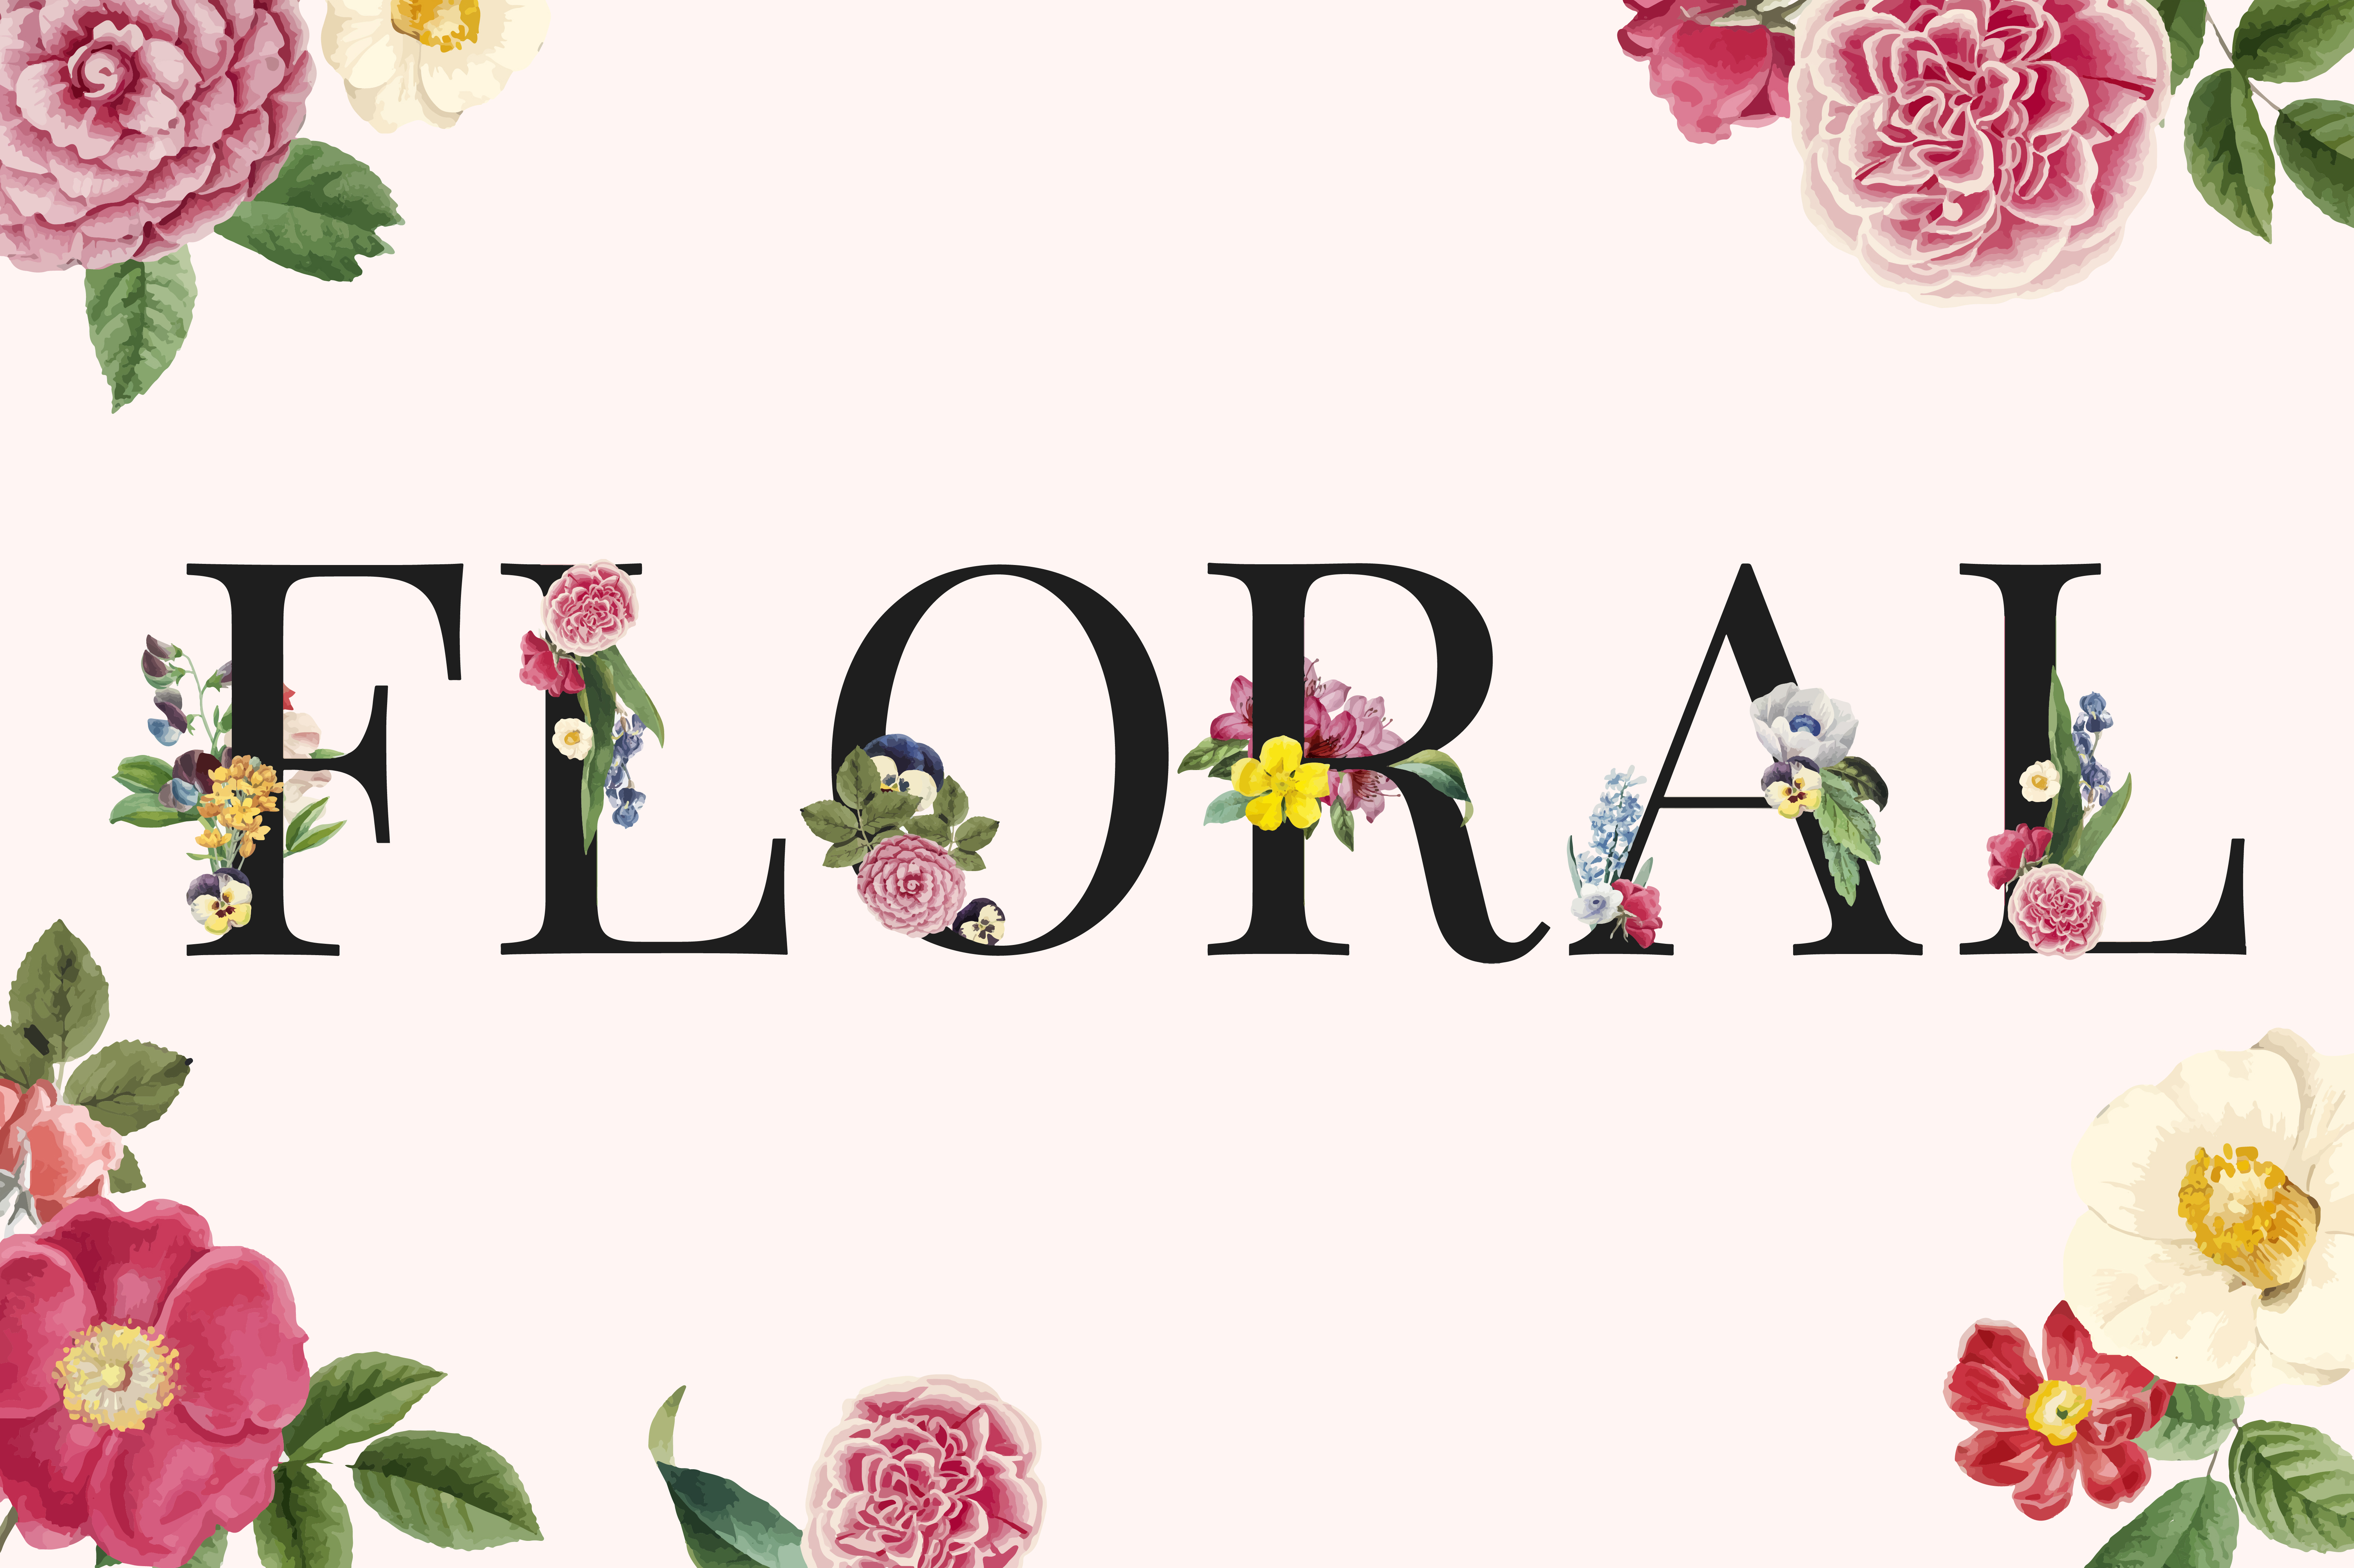 Download Floral background illustration - Download Free Vectors, Clipart Graphics & Vector Art